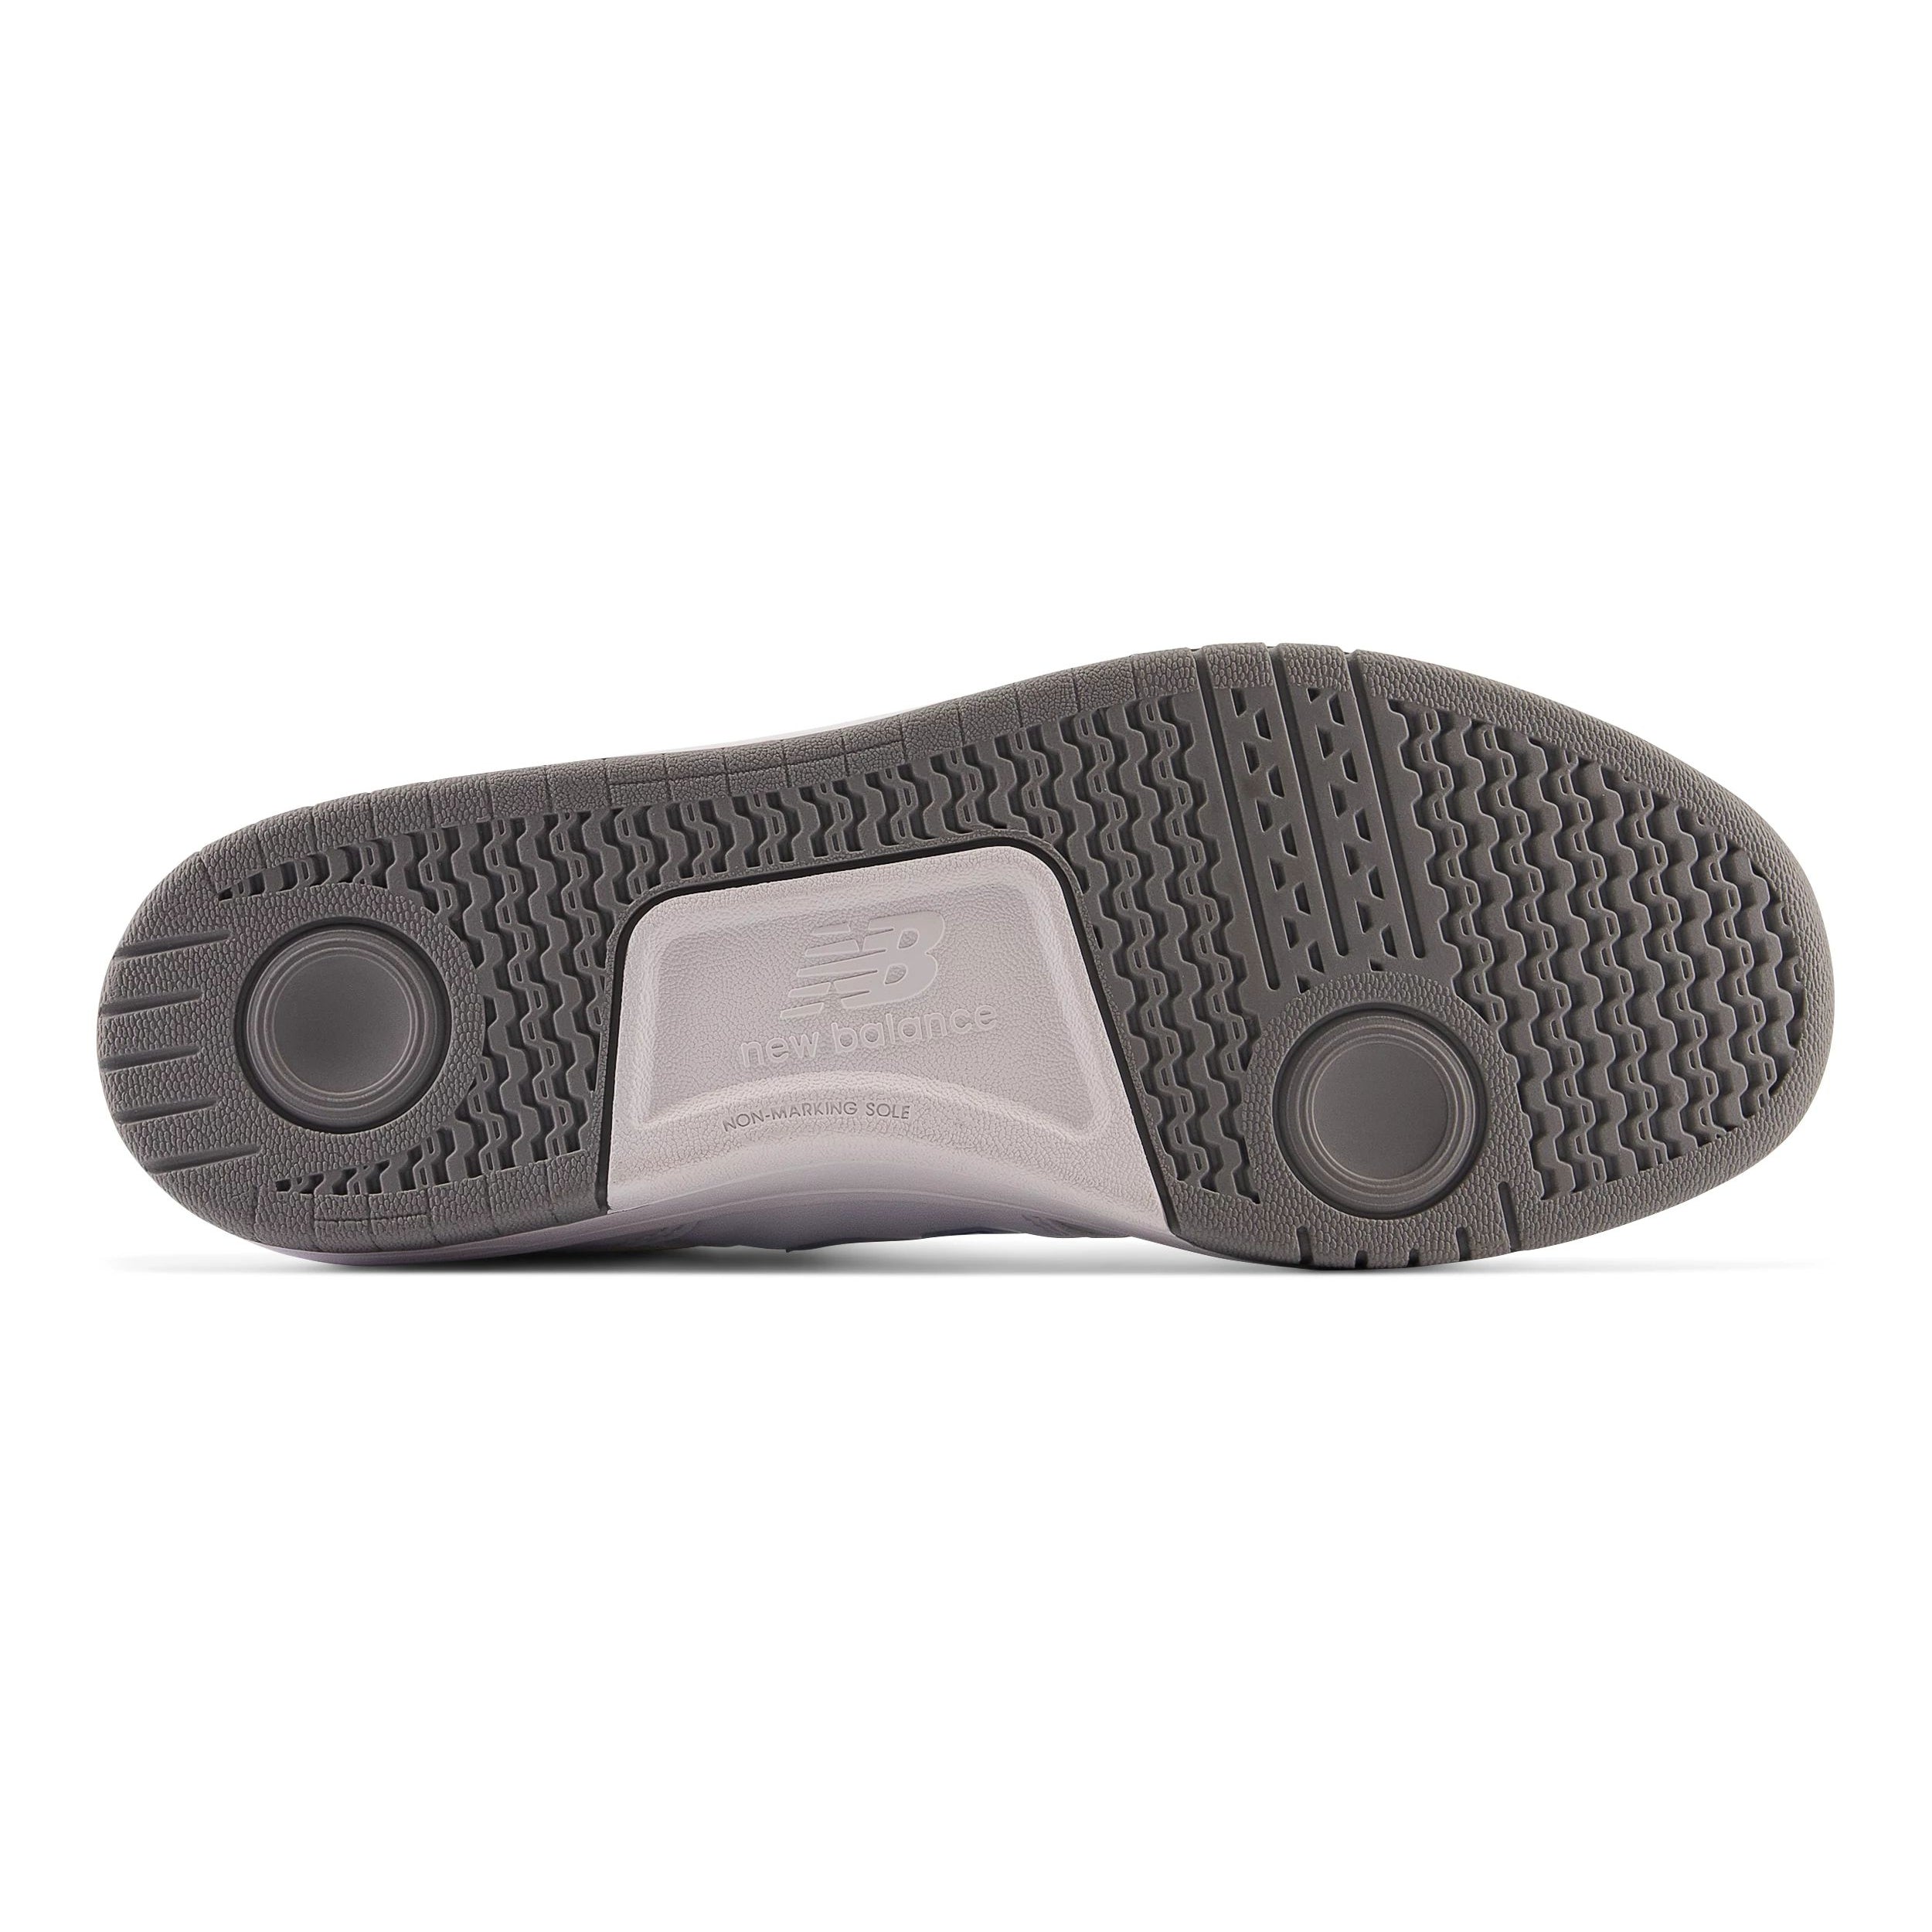 White/Blue NM425 NB Numeric Skate Shoe Bottom